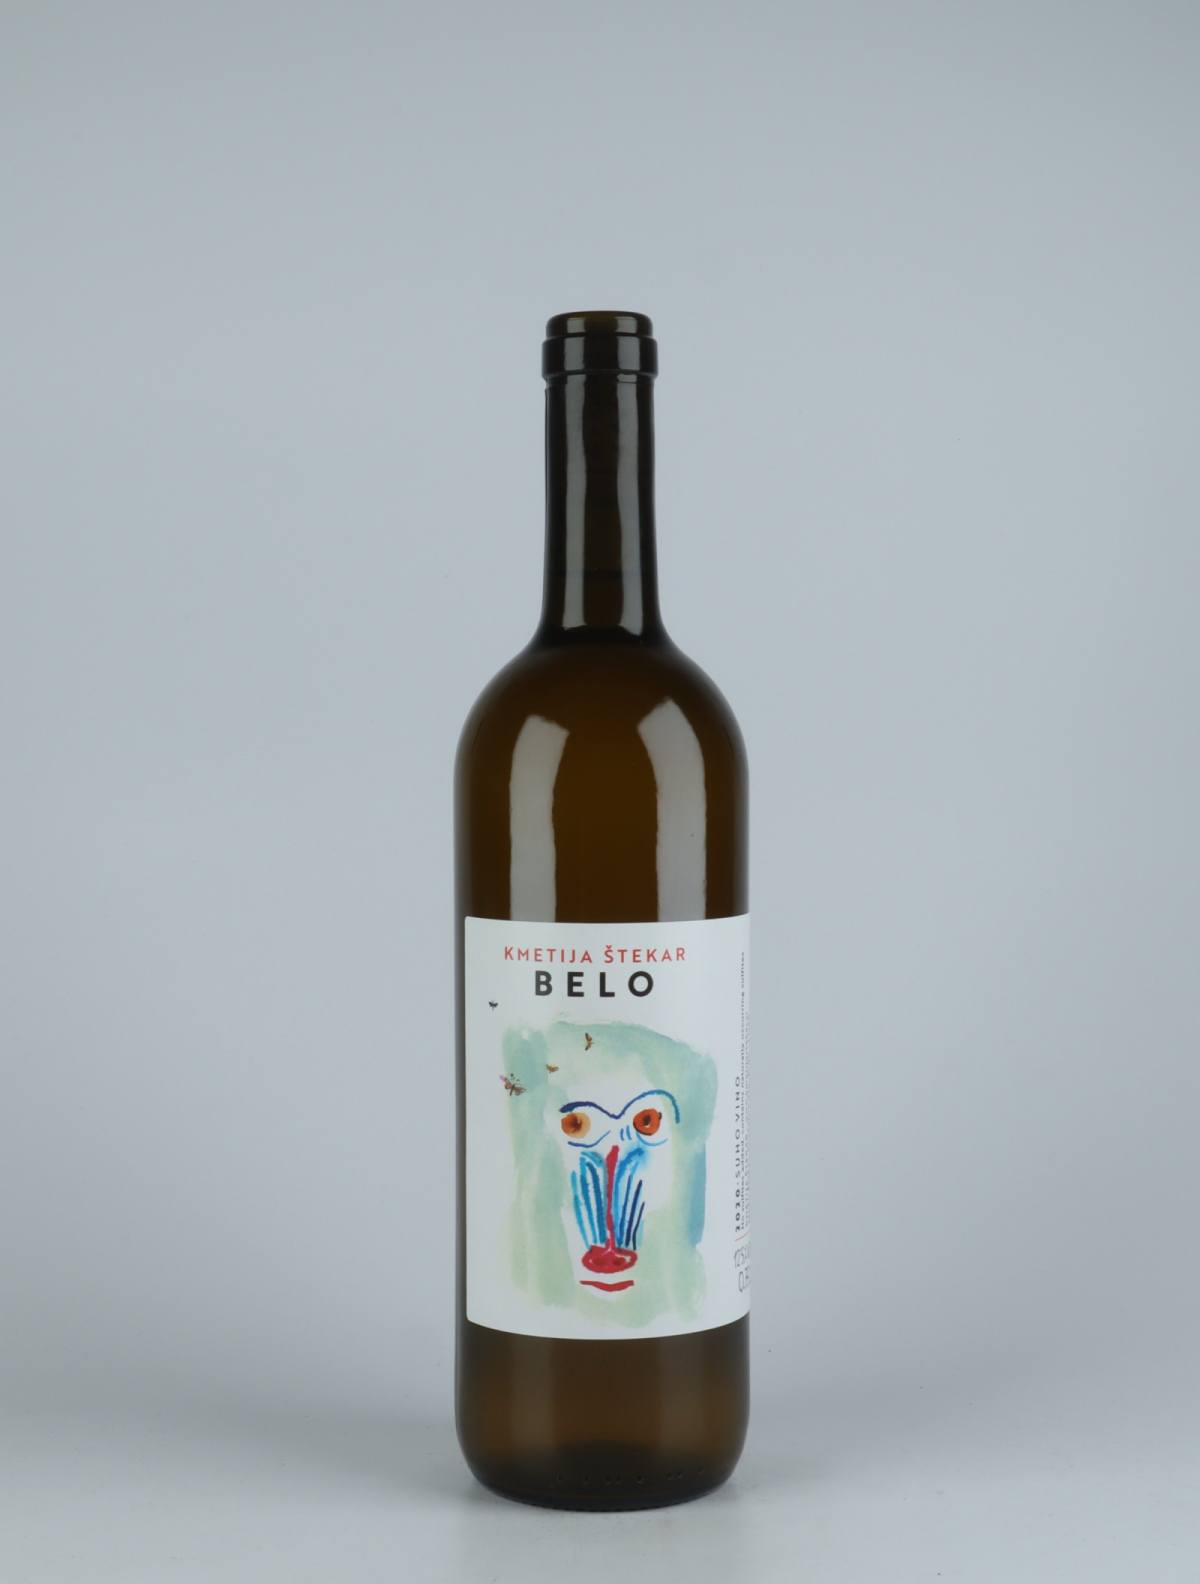 A bottle 2020 Belo White wine from Kmetija Stekar, Brda in Slovenia